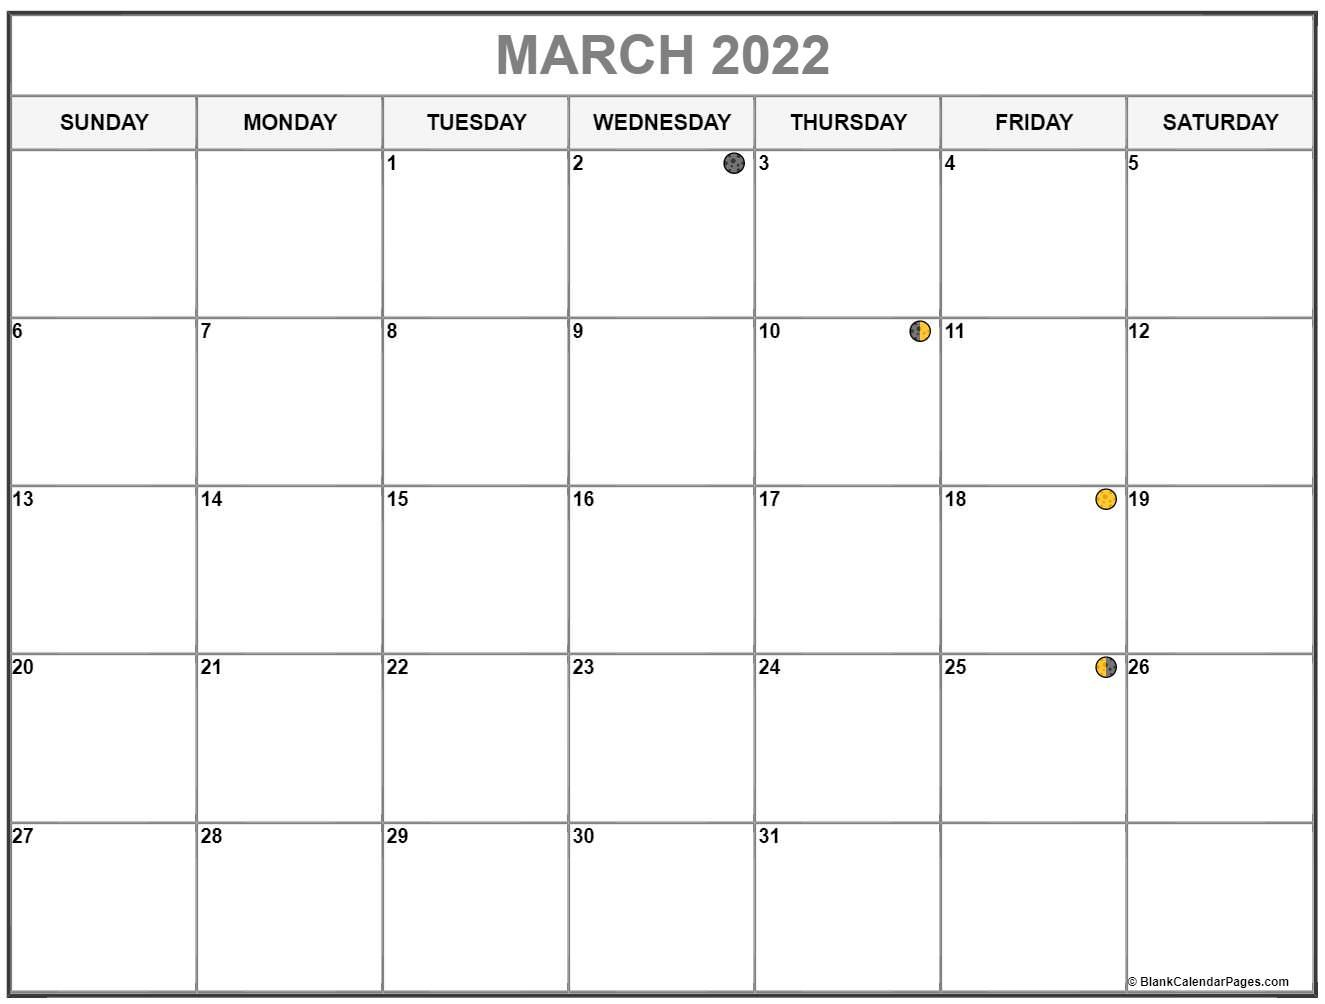 March 2022 Lunar Calendar | Moon Phase Calendar